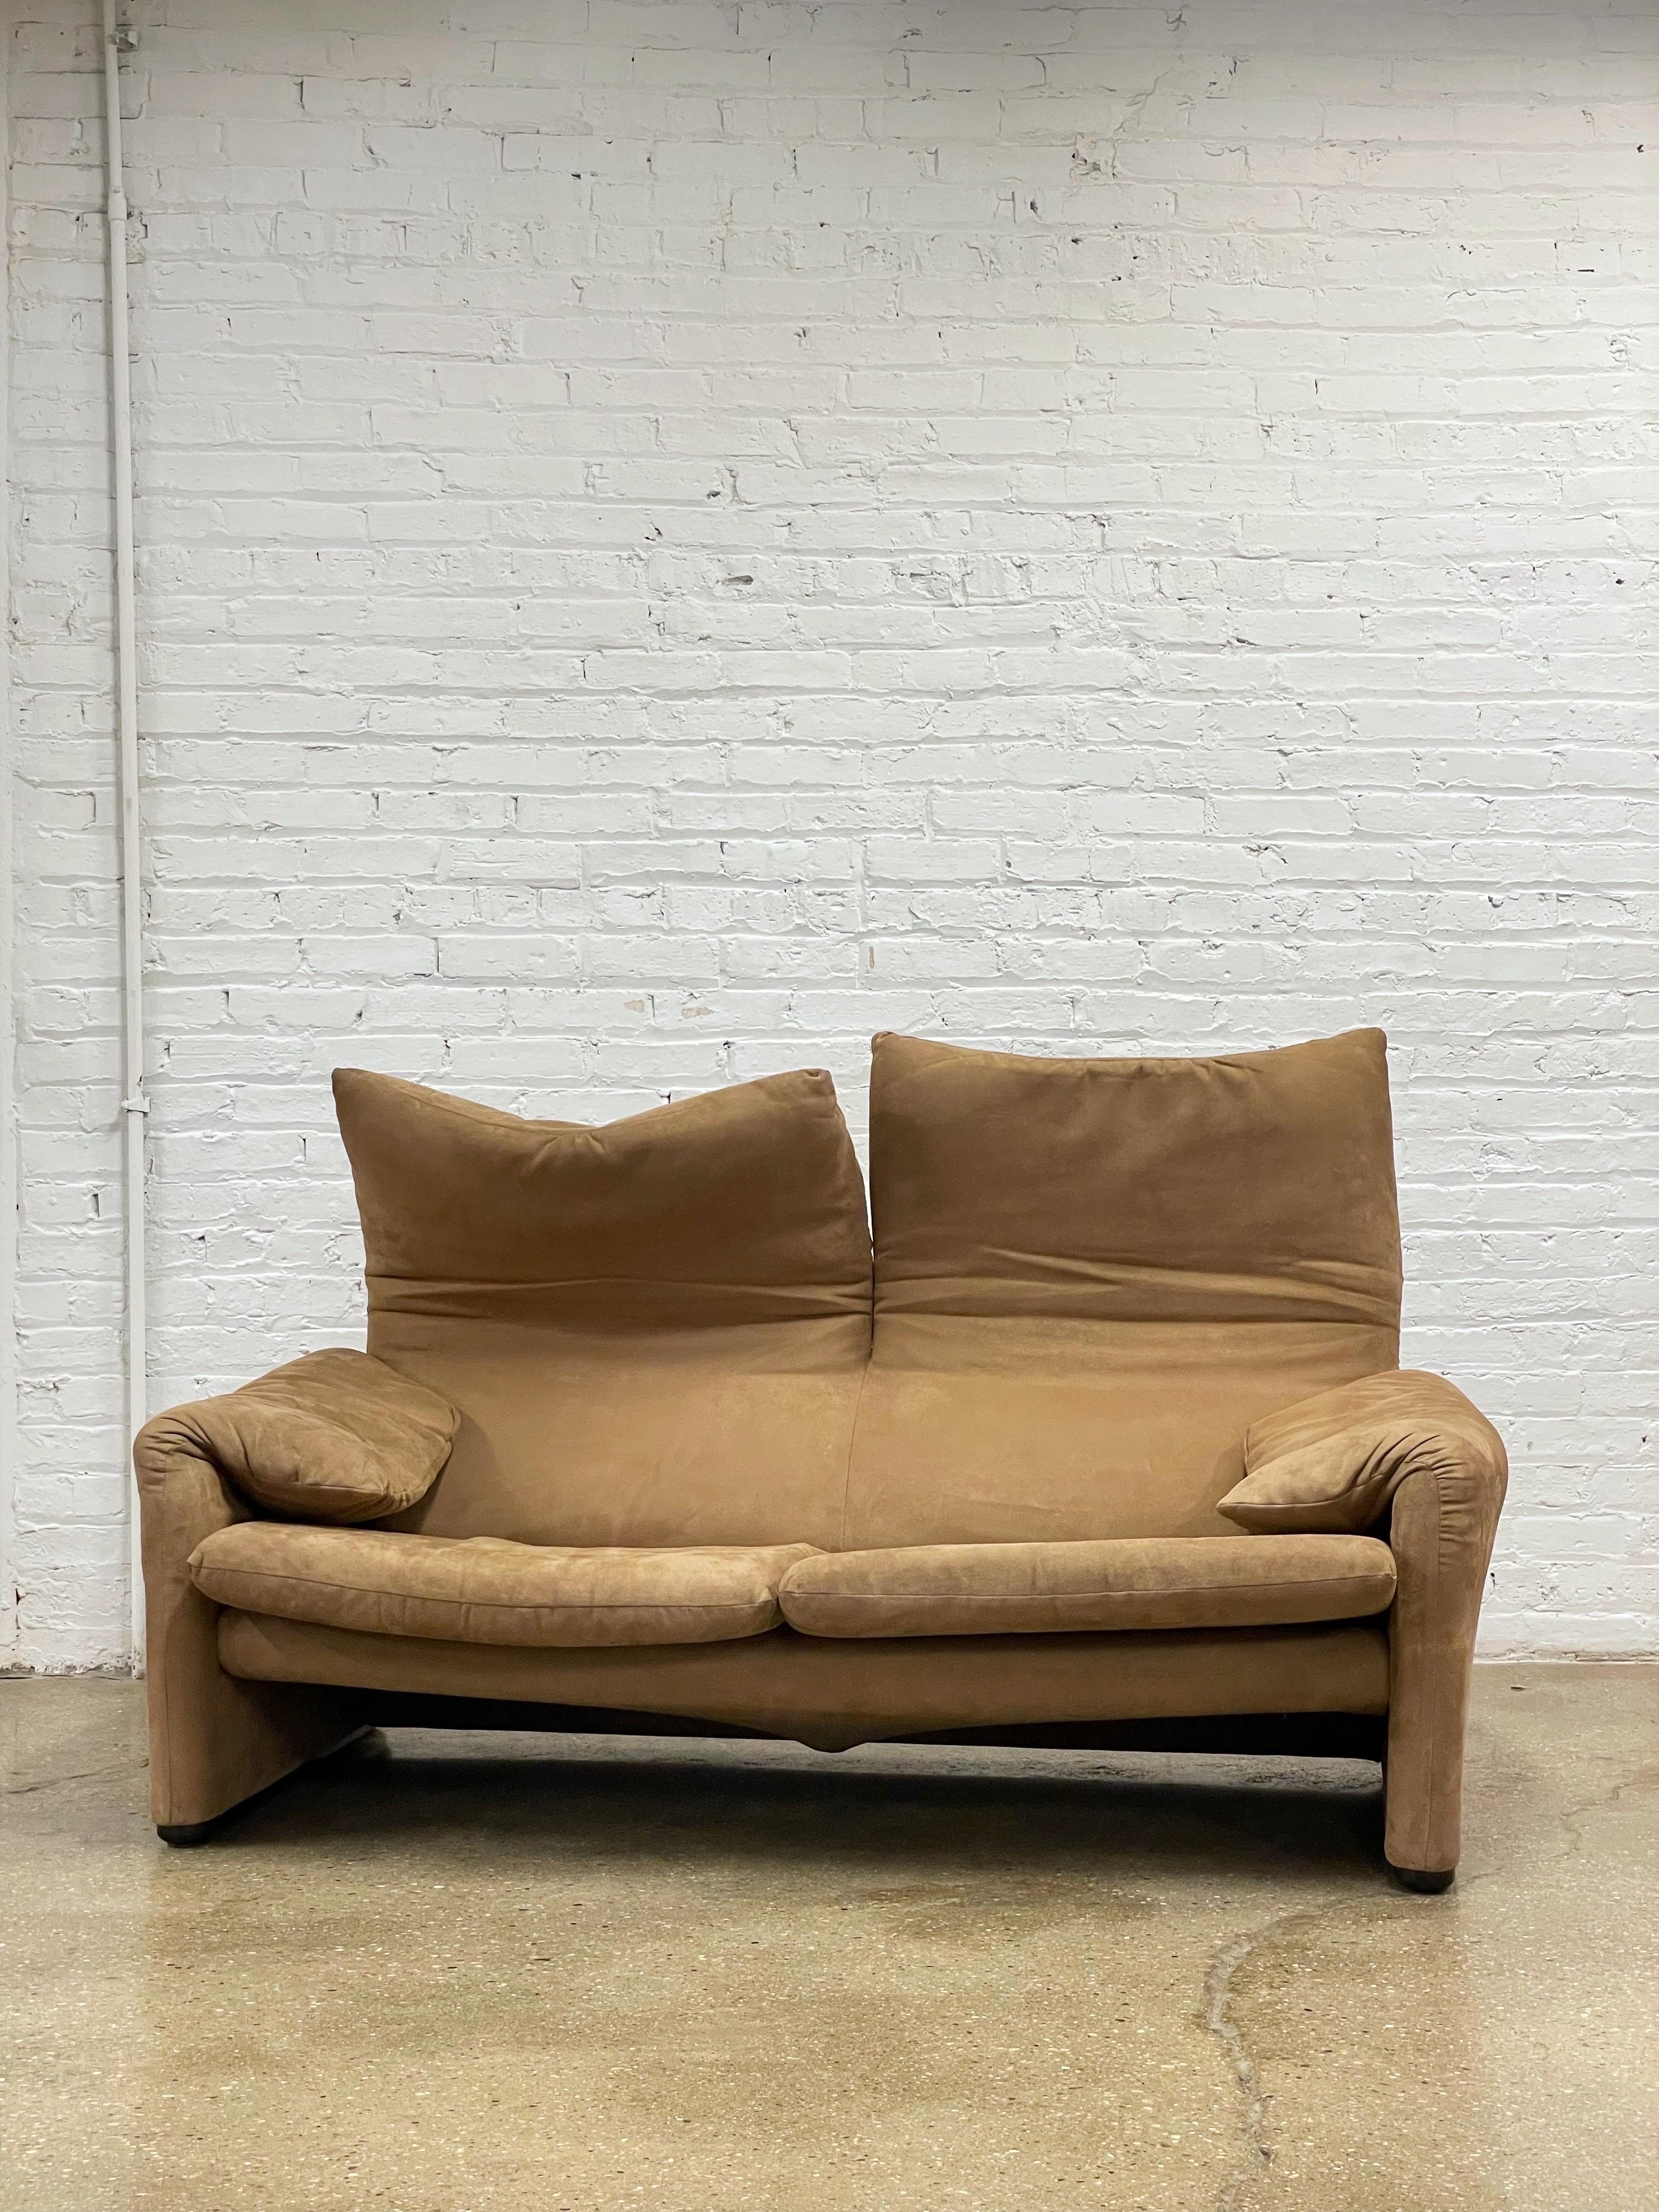 An iconic two seat maralunga sofa designed by Italian designer Vico Magistretti for Cassina.